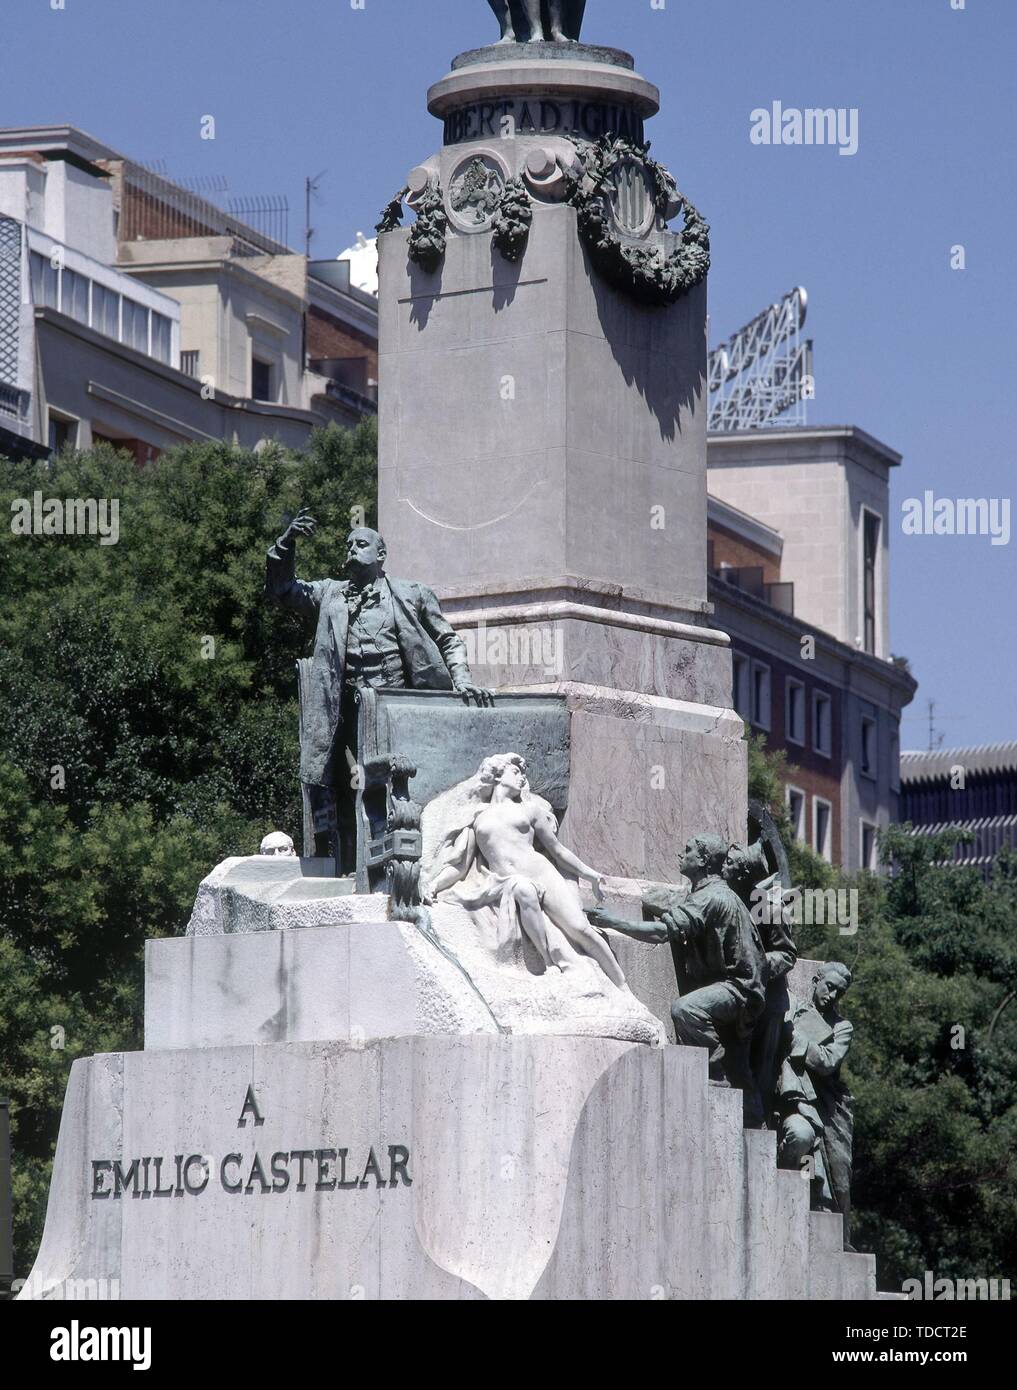 MONUMENTO A EMILIO CASTELAR - DETALLE DE LA BASE DEL MONUMENTO CON ESCULTURAS. Location: PLAZA DE EMILIO CASTELAR. MADRID. SPAIN. Stock Photo